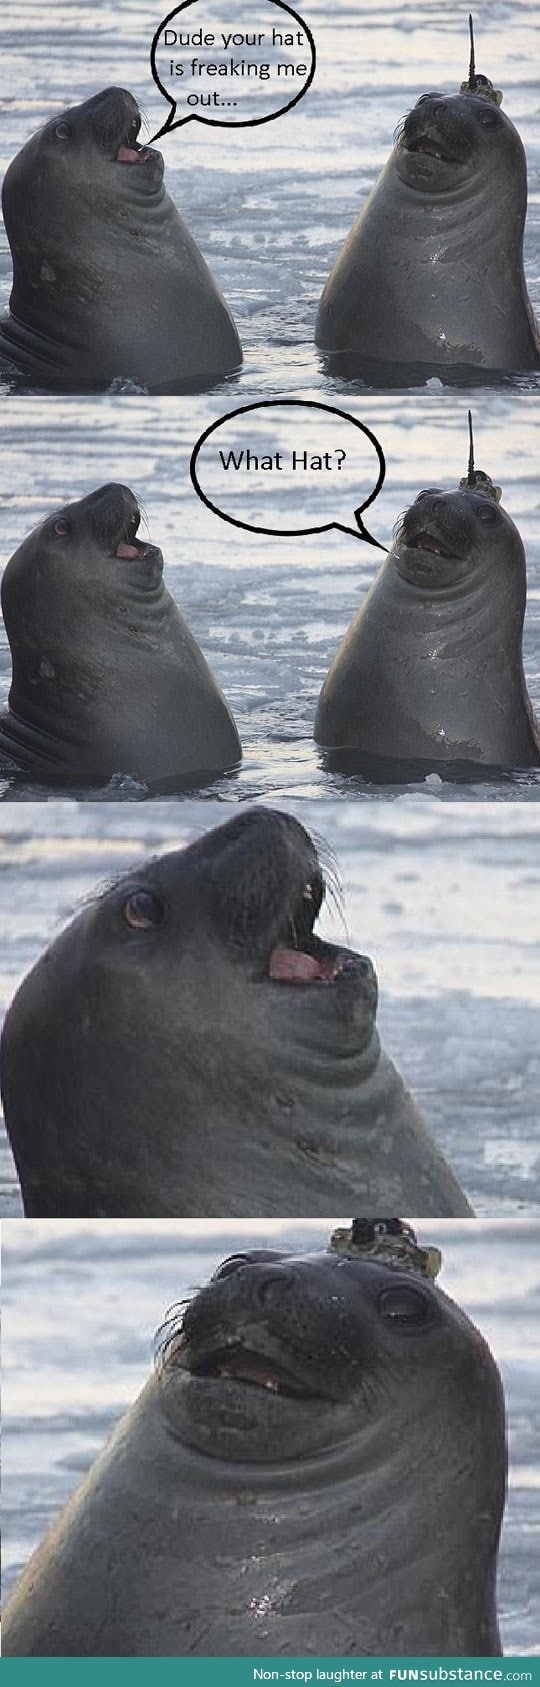 Seal life